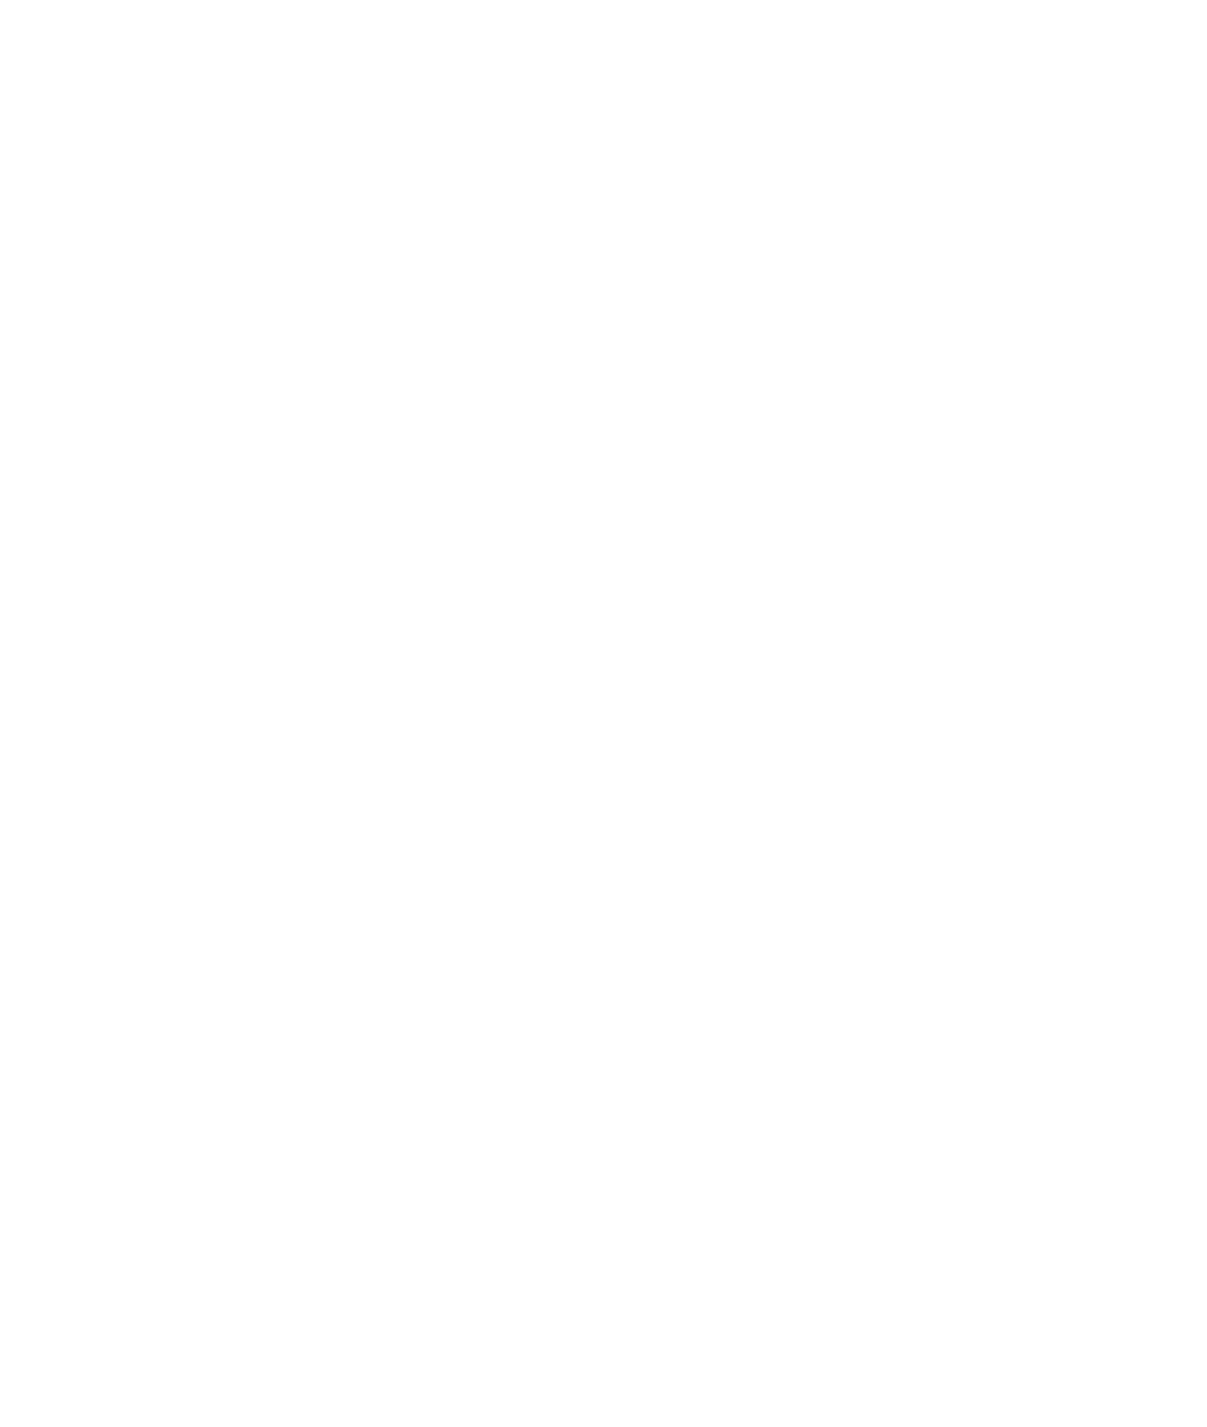 Financial